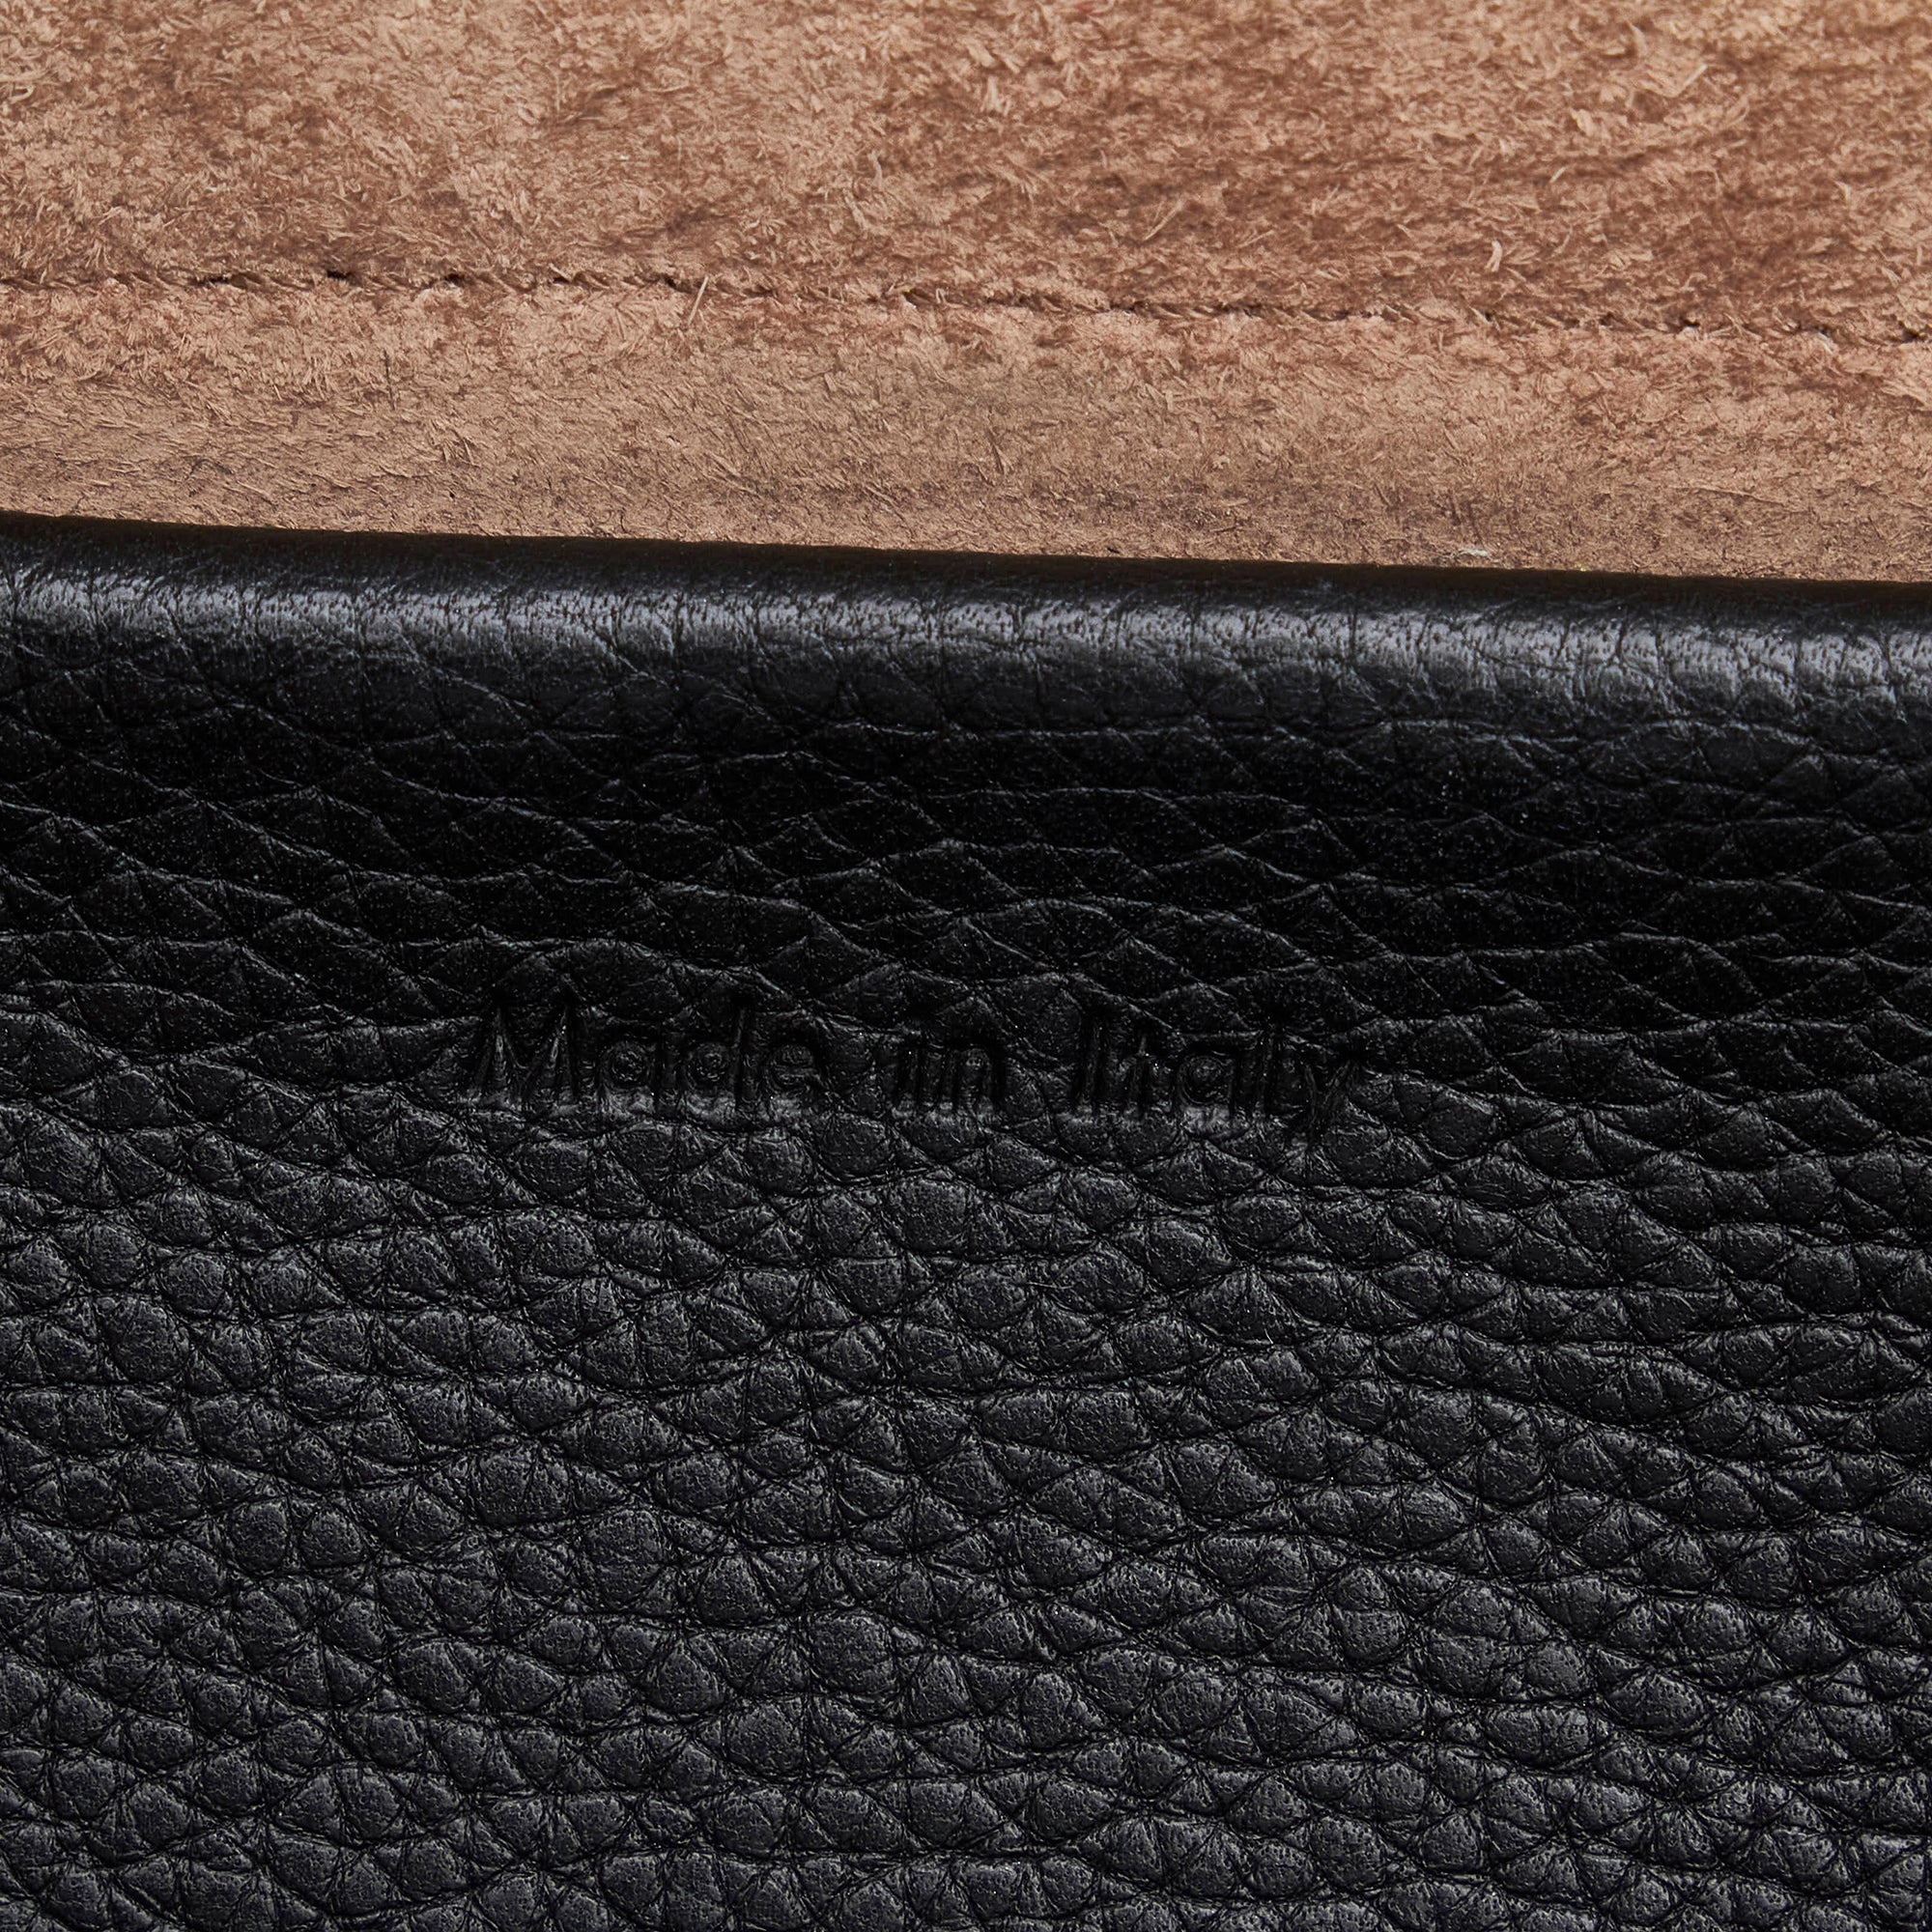 Celine Pico Belt Bag - Black Mini Bags, Handbags - CEL264705